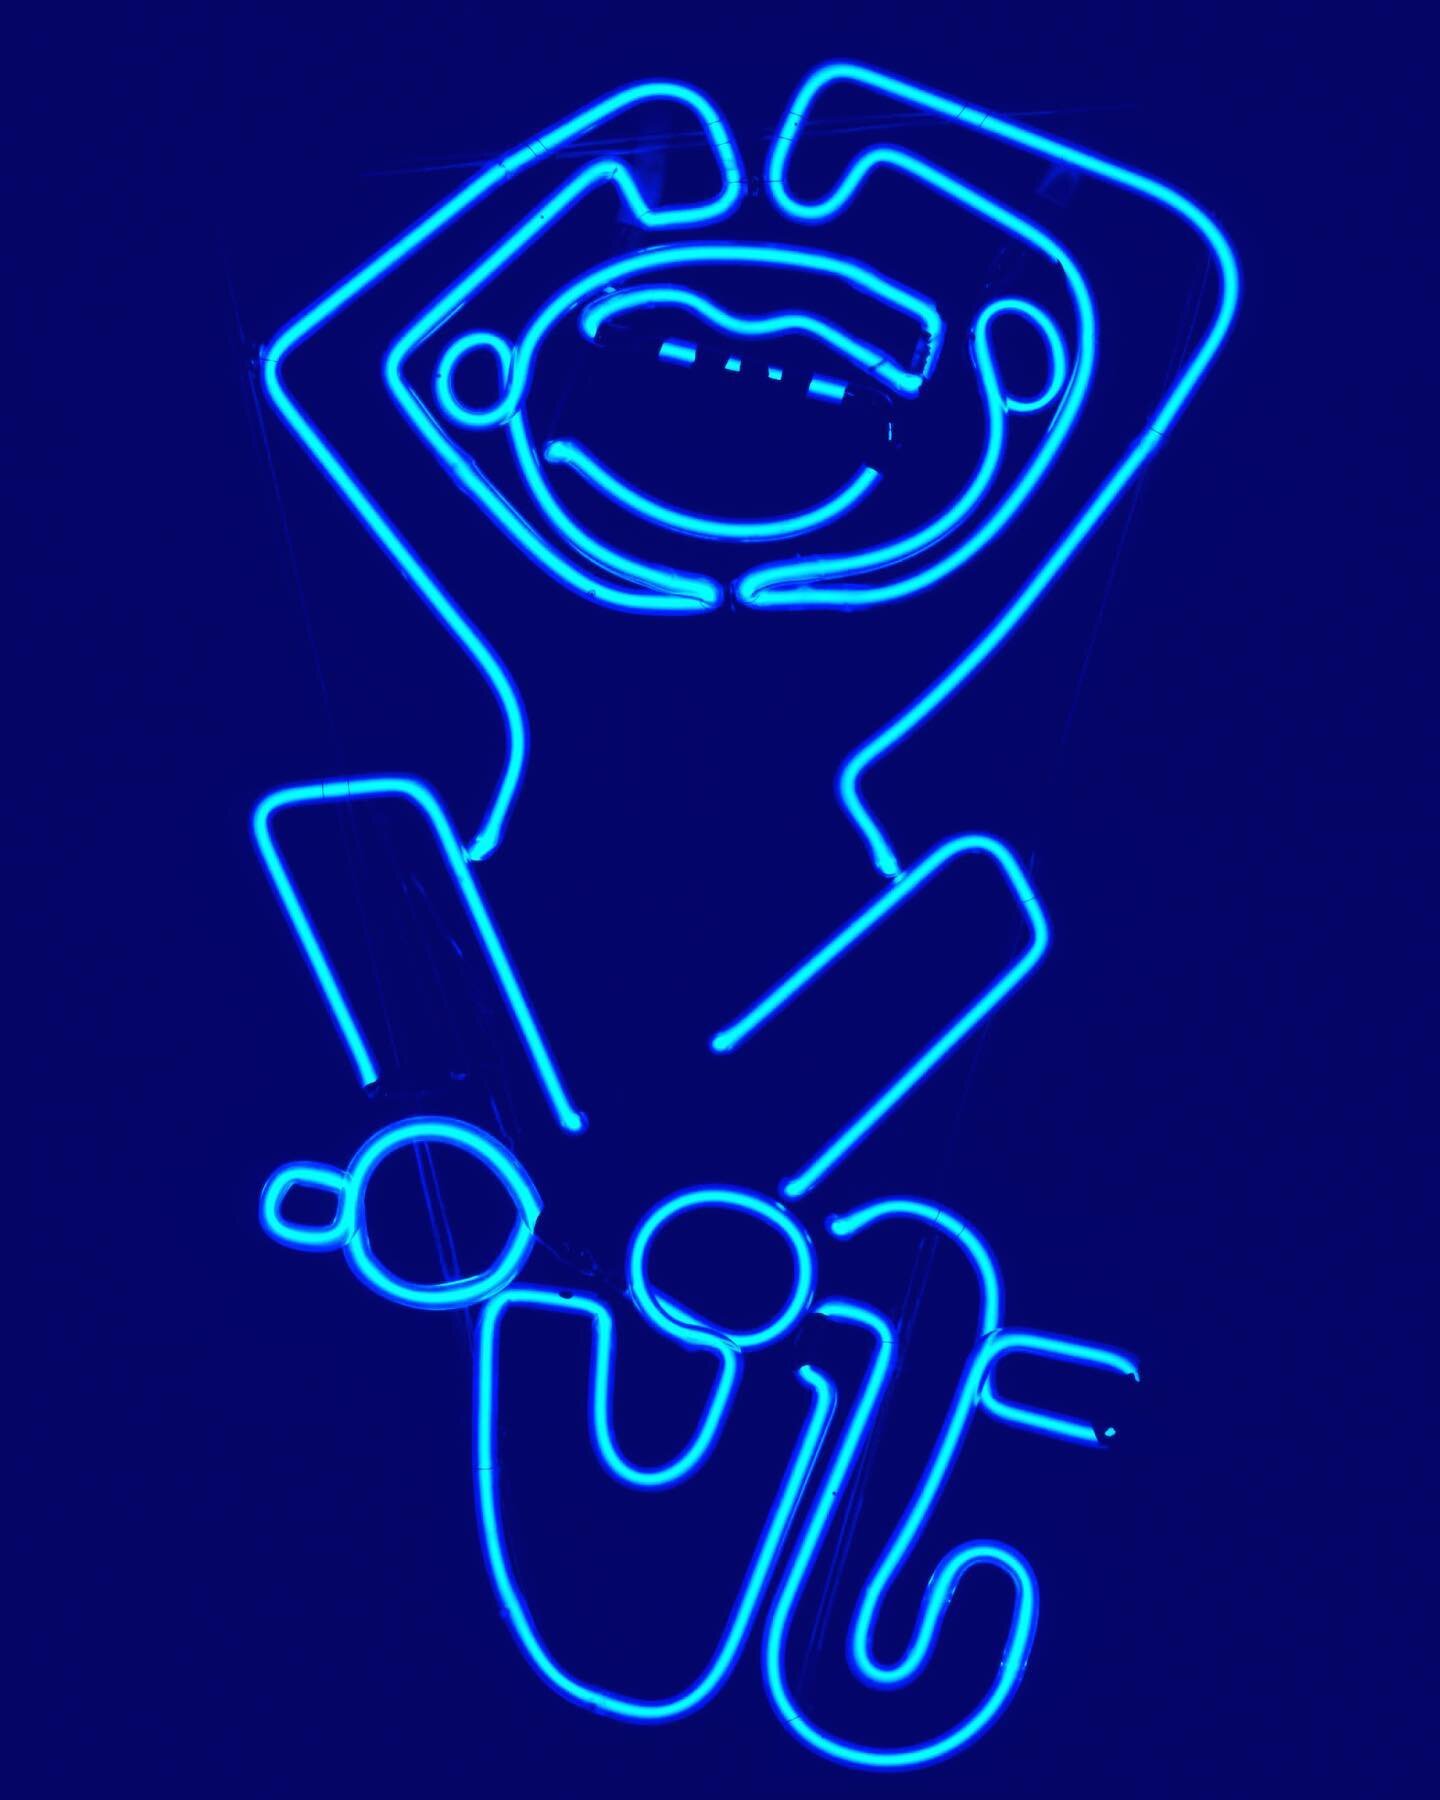 monkey business⁠
⁠
***⁠
⁠
Monkey trade sign (circa 1940), American, Argon, mercury, glass tubing, black paint, and electrical tape. Source: Smithsonian American Art Museum, Washington D.C. ⁠
⁠
***⁠
⁠
#TradeSign #NeonLight #Monkey #MonkeyBusiness #Vin